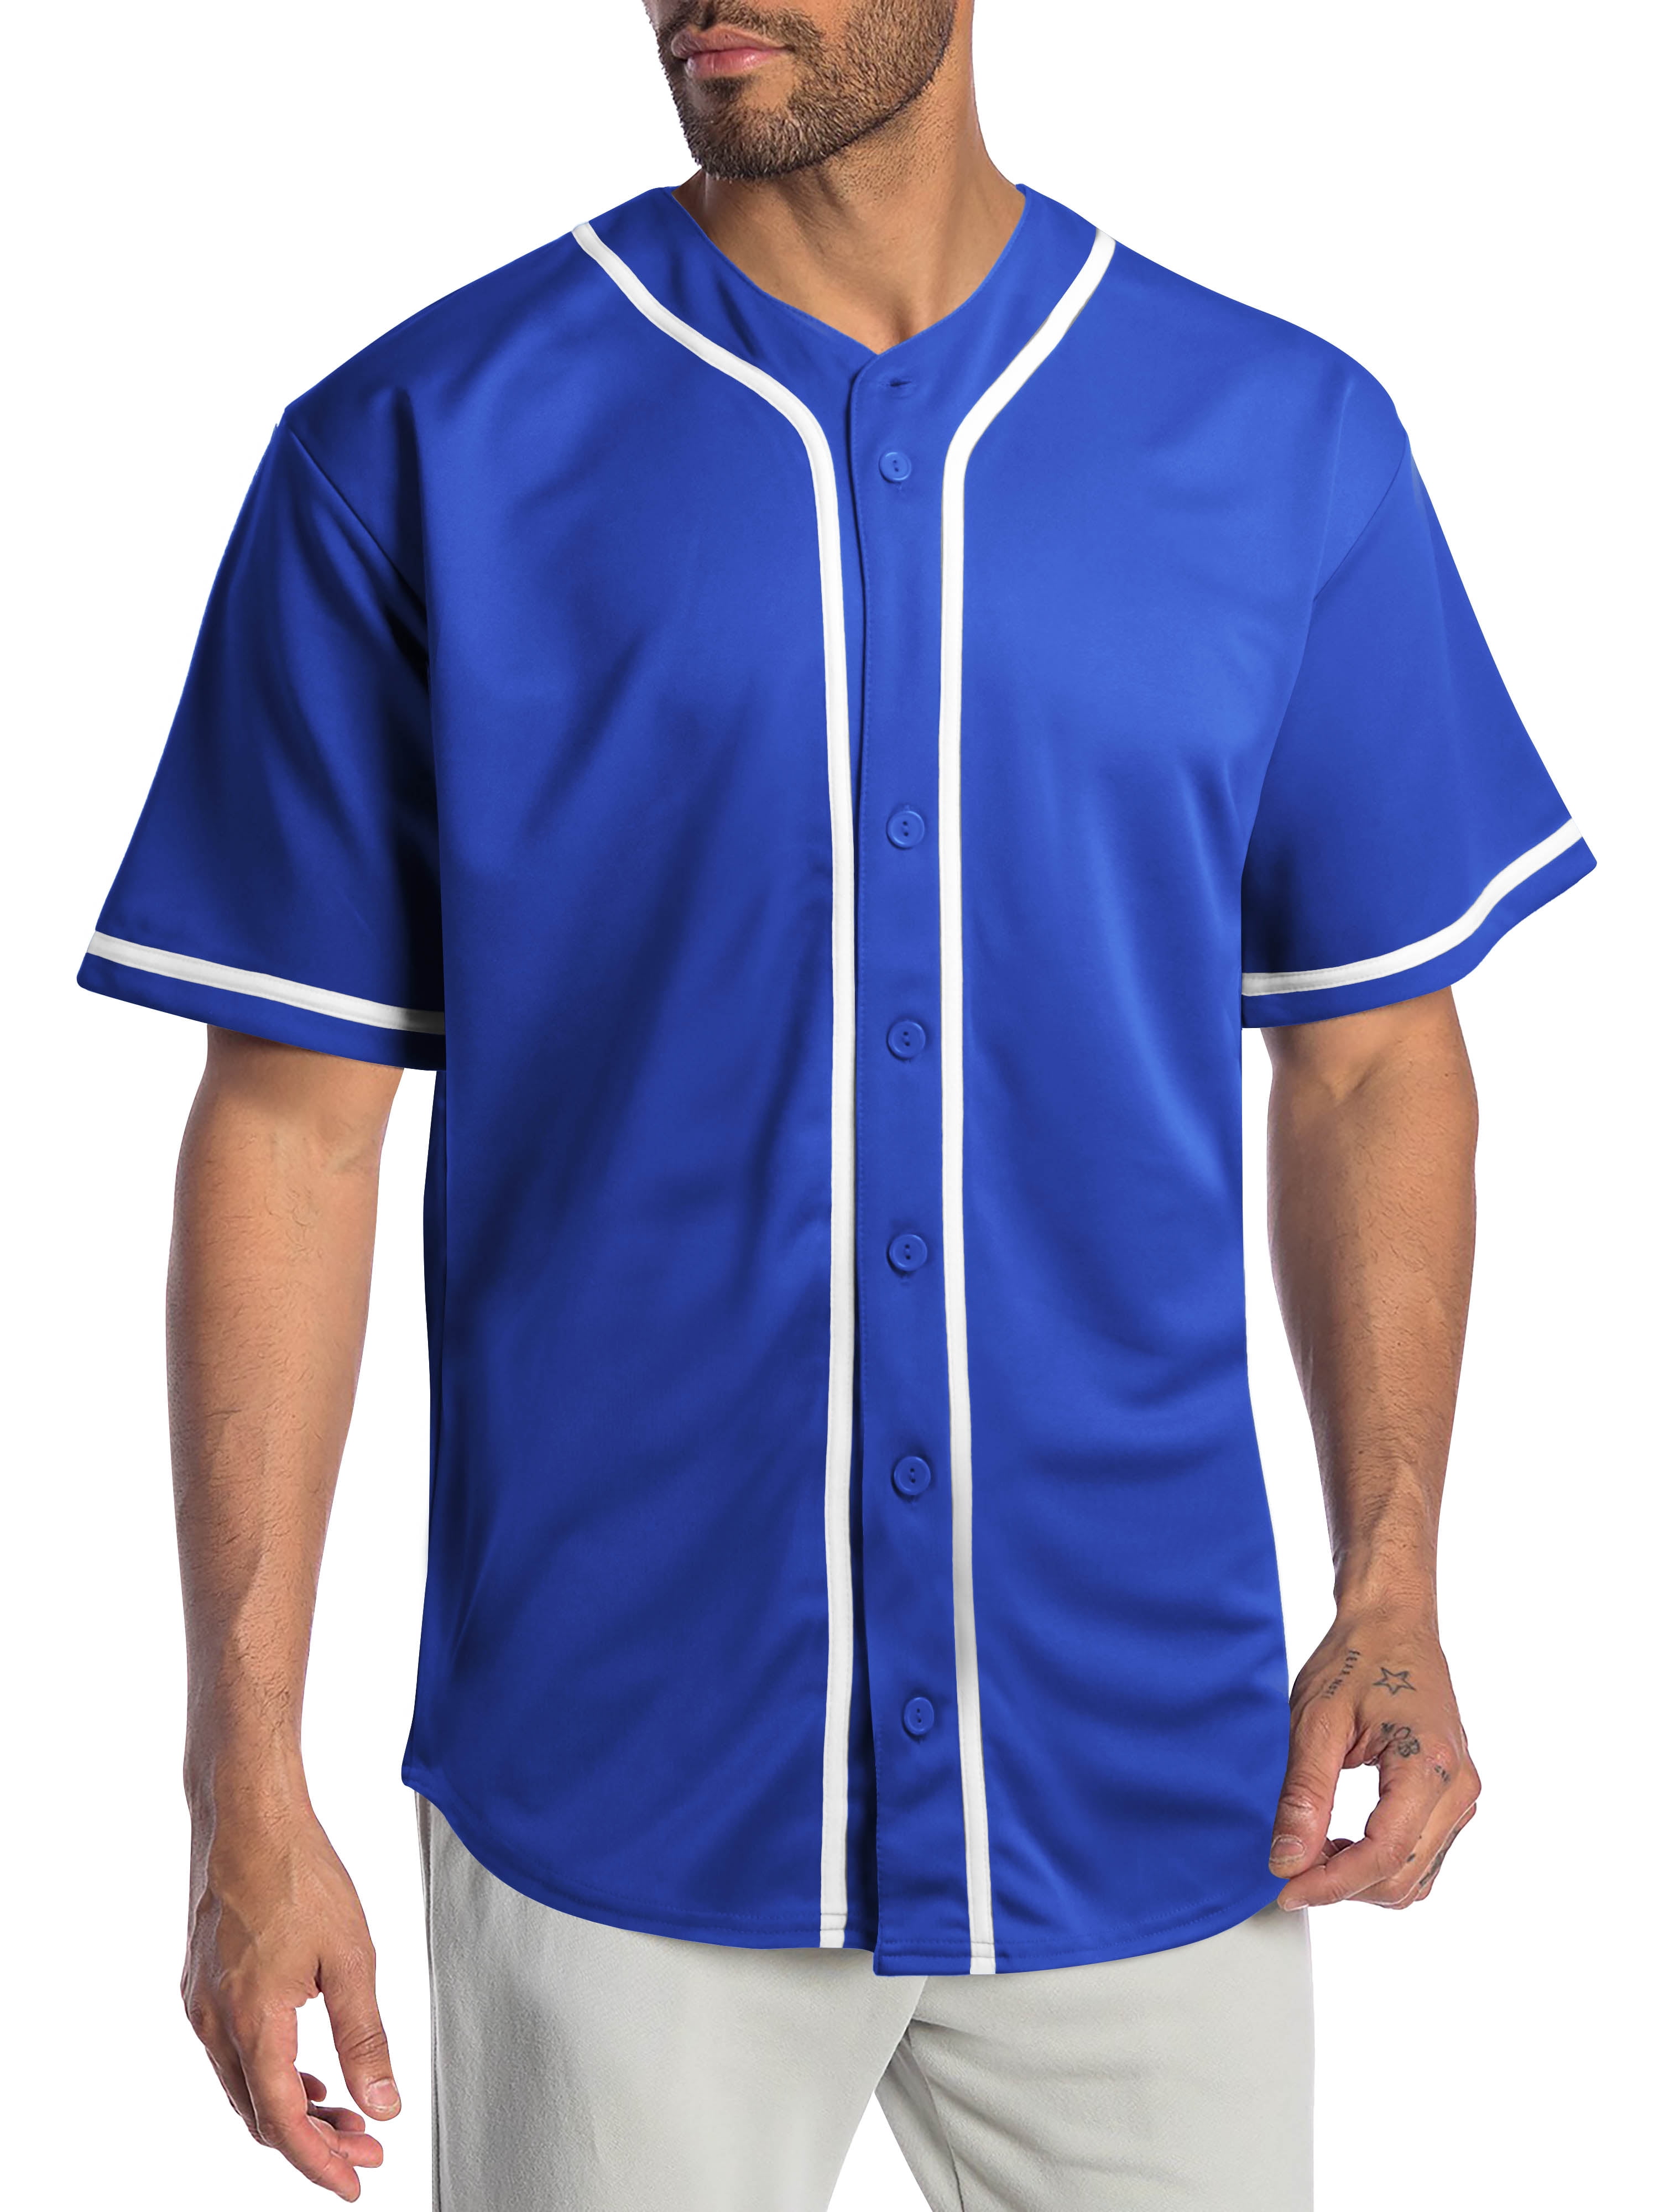 baseball jersey shirt